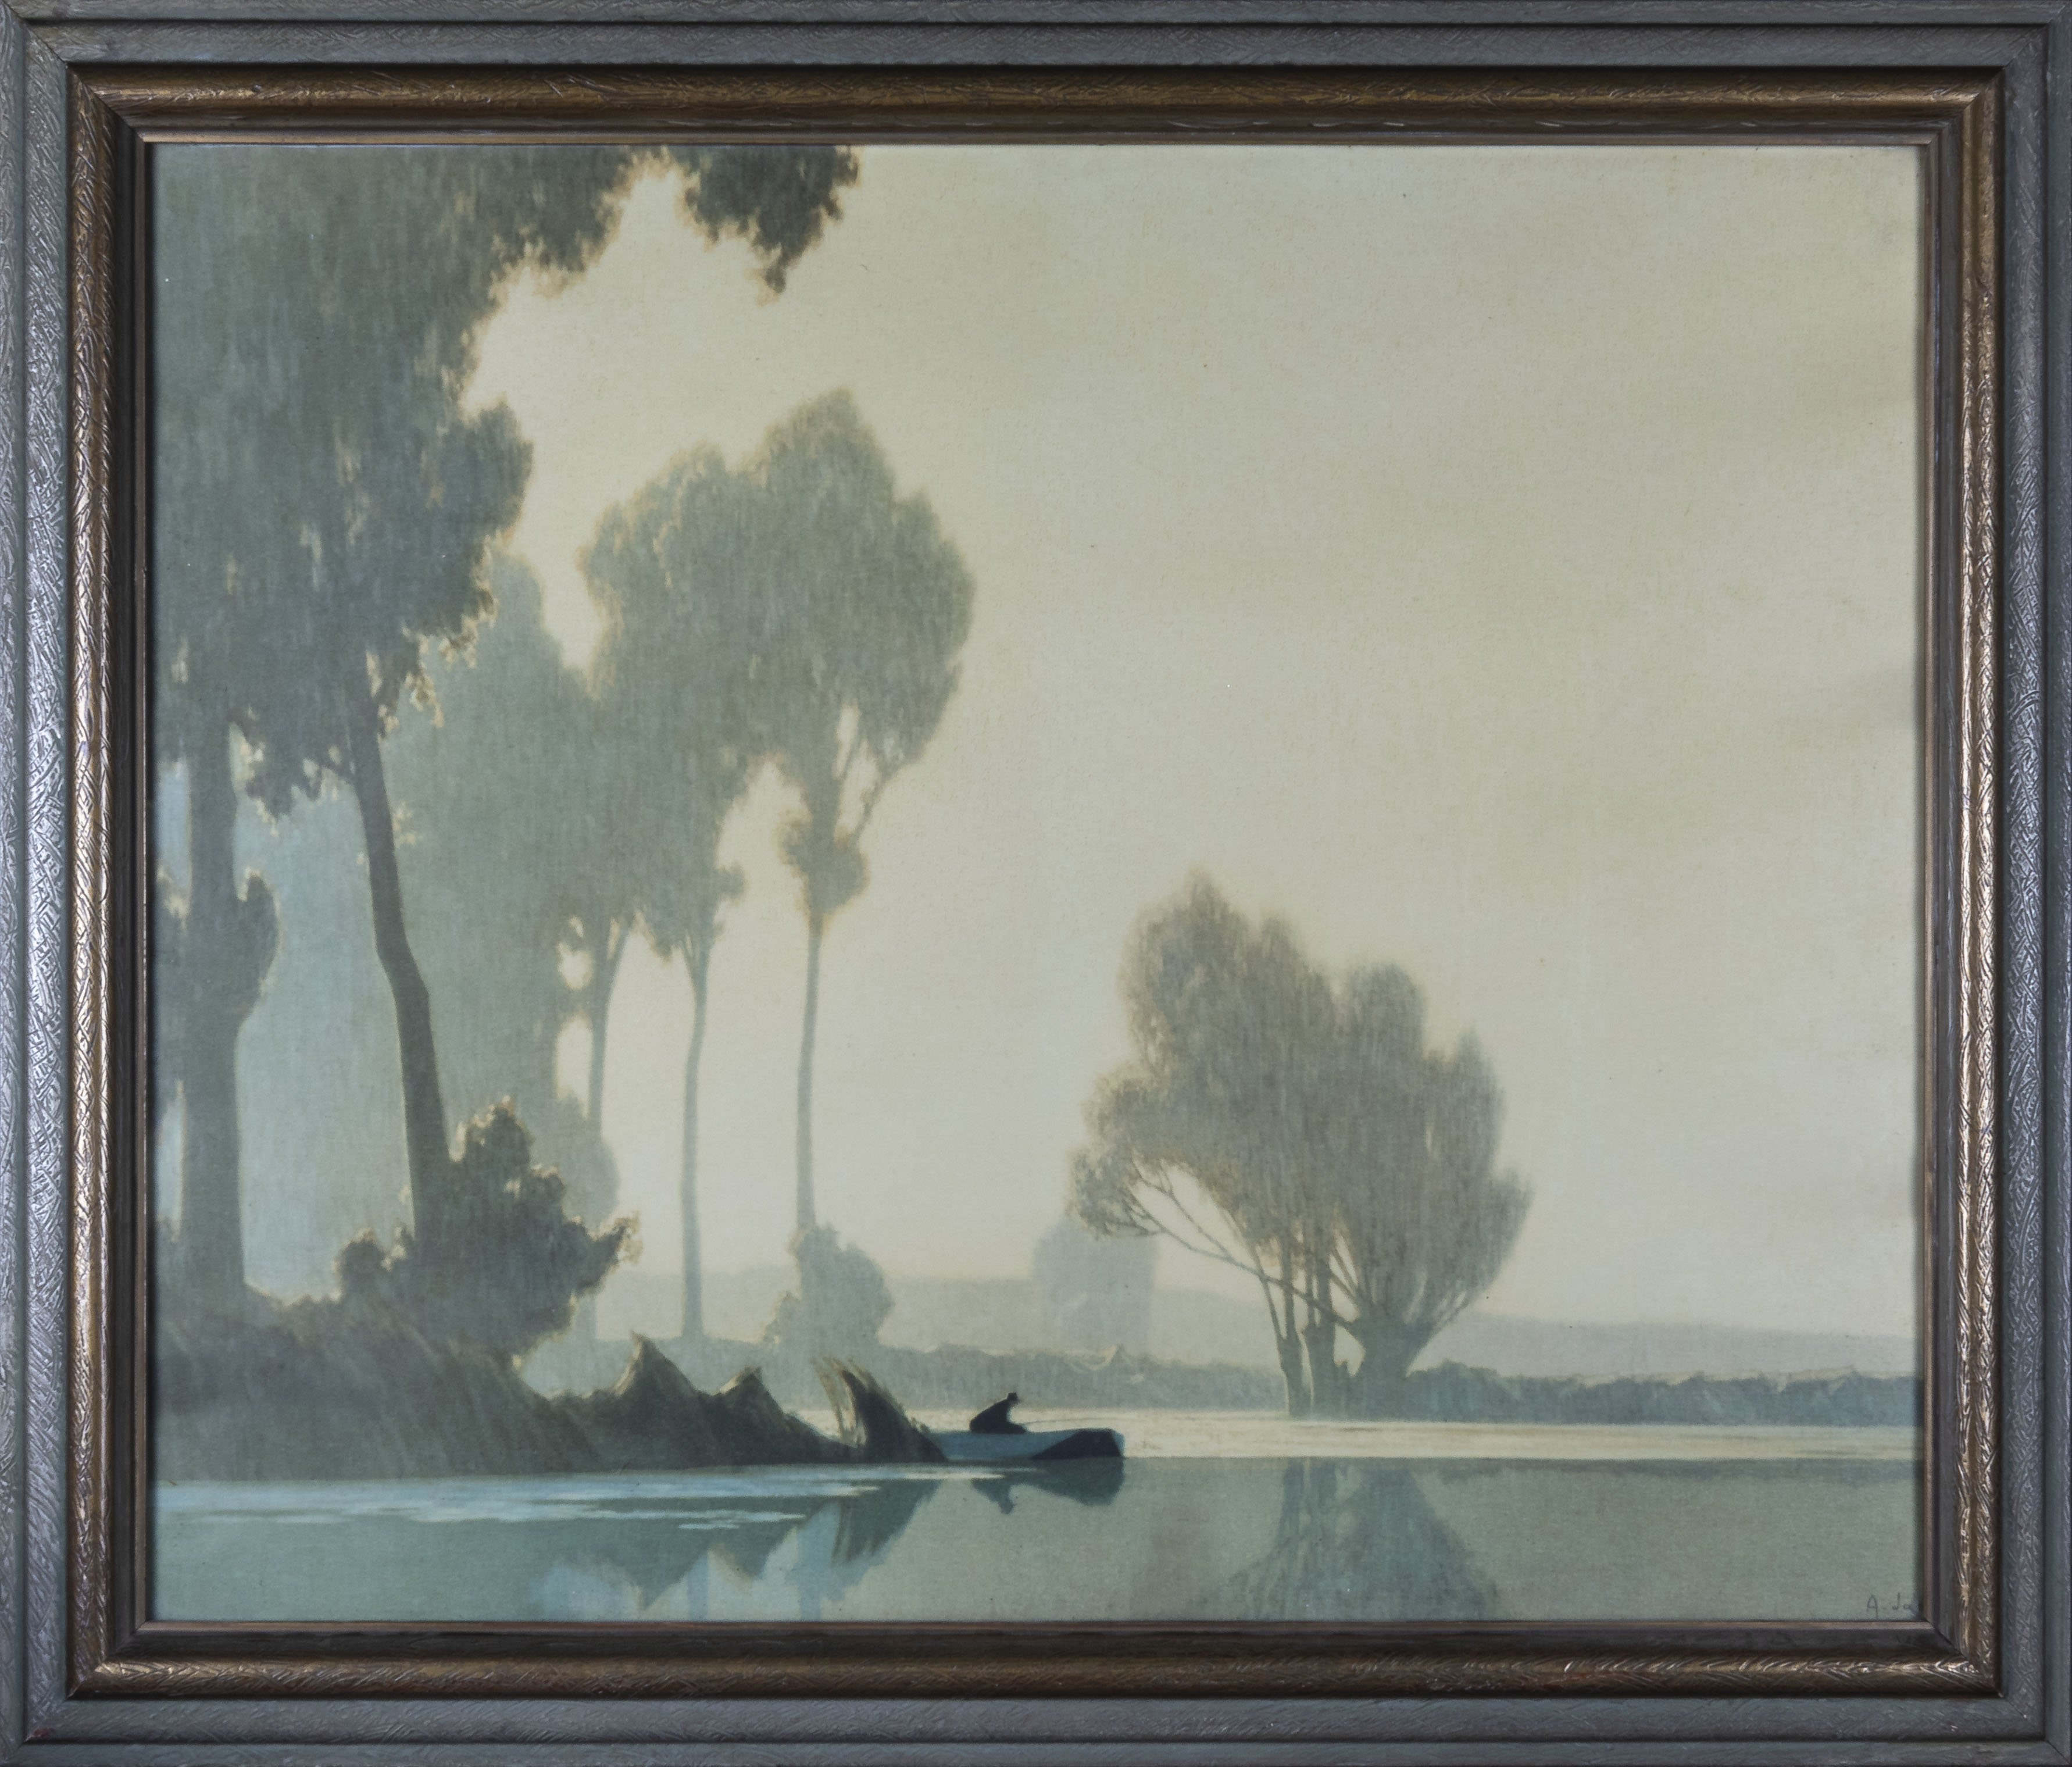 A large framed print depicting a lake scene, total size 69cm x 79cm